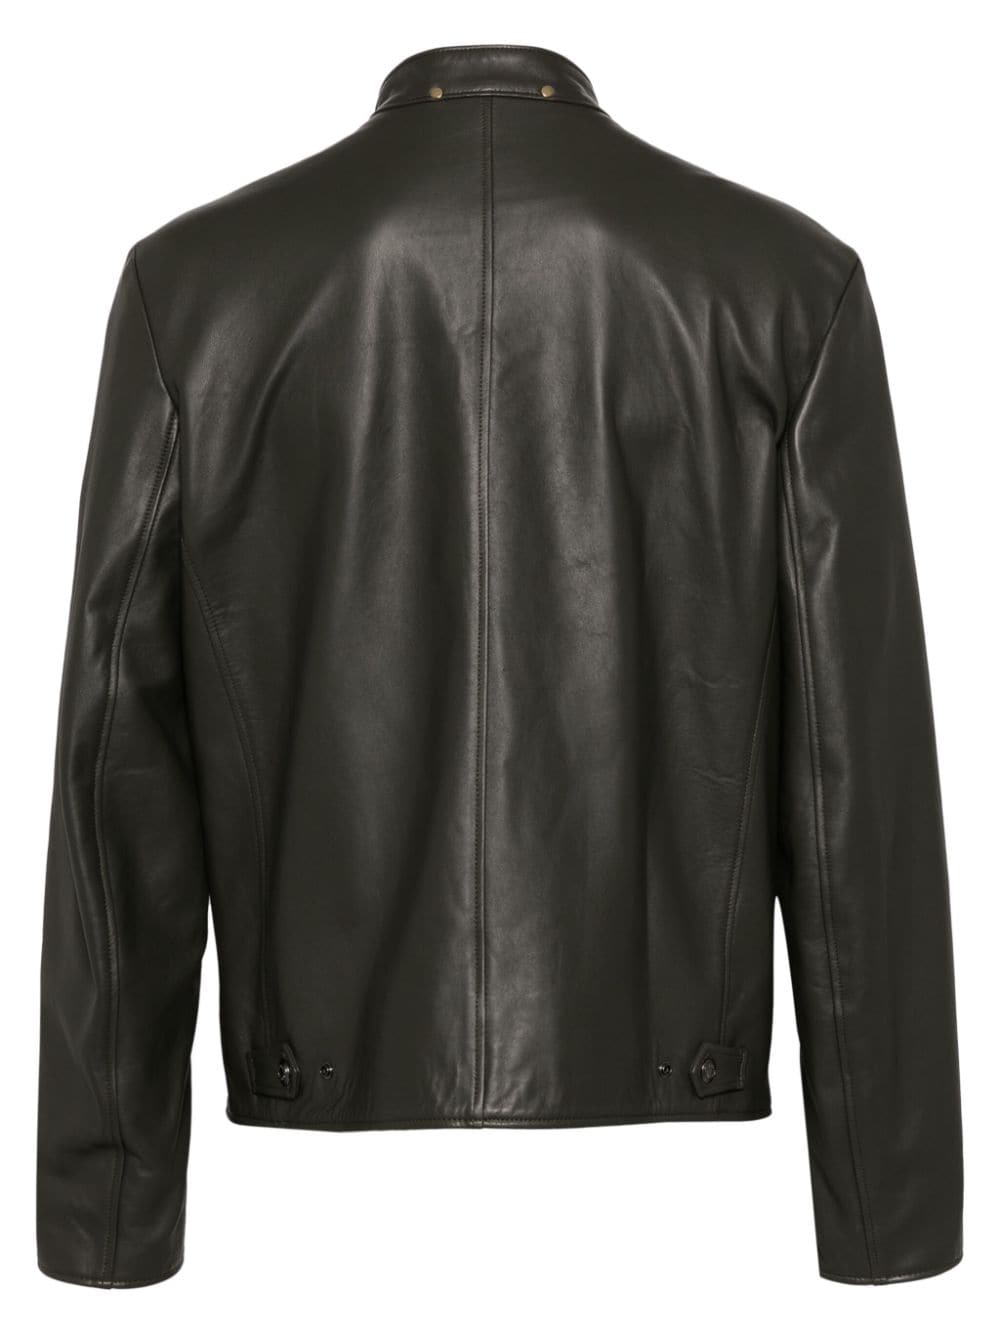 Paul Smith band-collar leather biker jacket - Groen